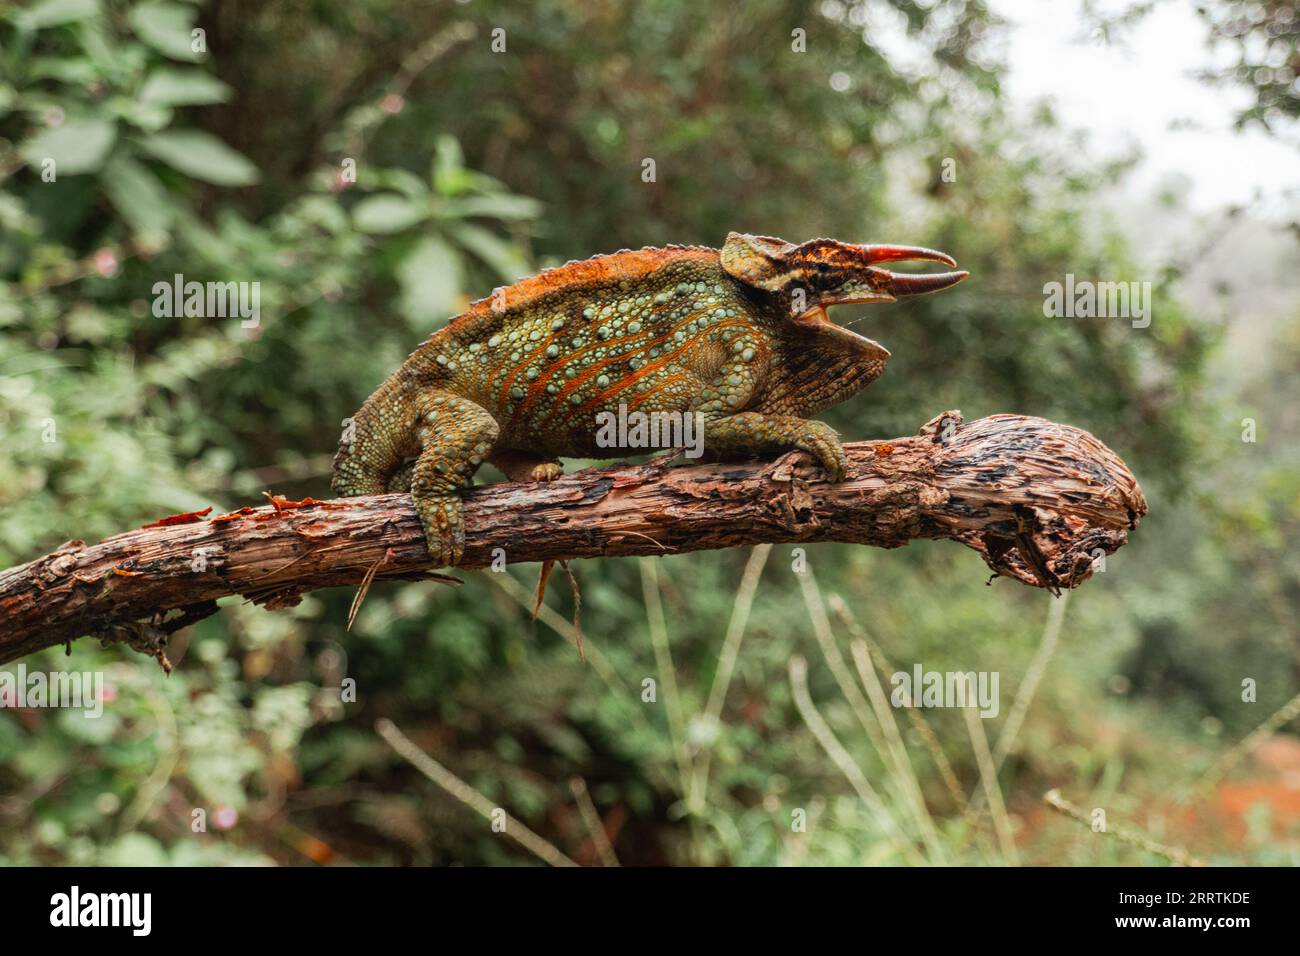 Wemer's three horned chameleon or Uluguru three horned chameleon - Trioceros werneri endemic to Tanzania on a branch at Uluguru Mountains, Tanzania Stock Photo